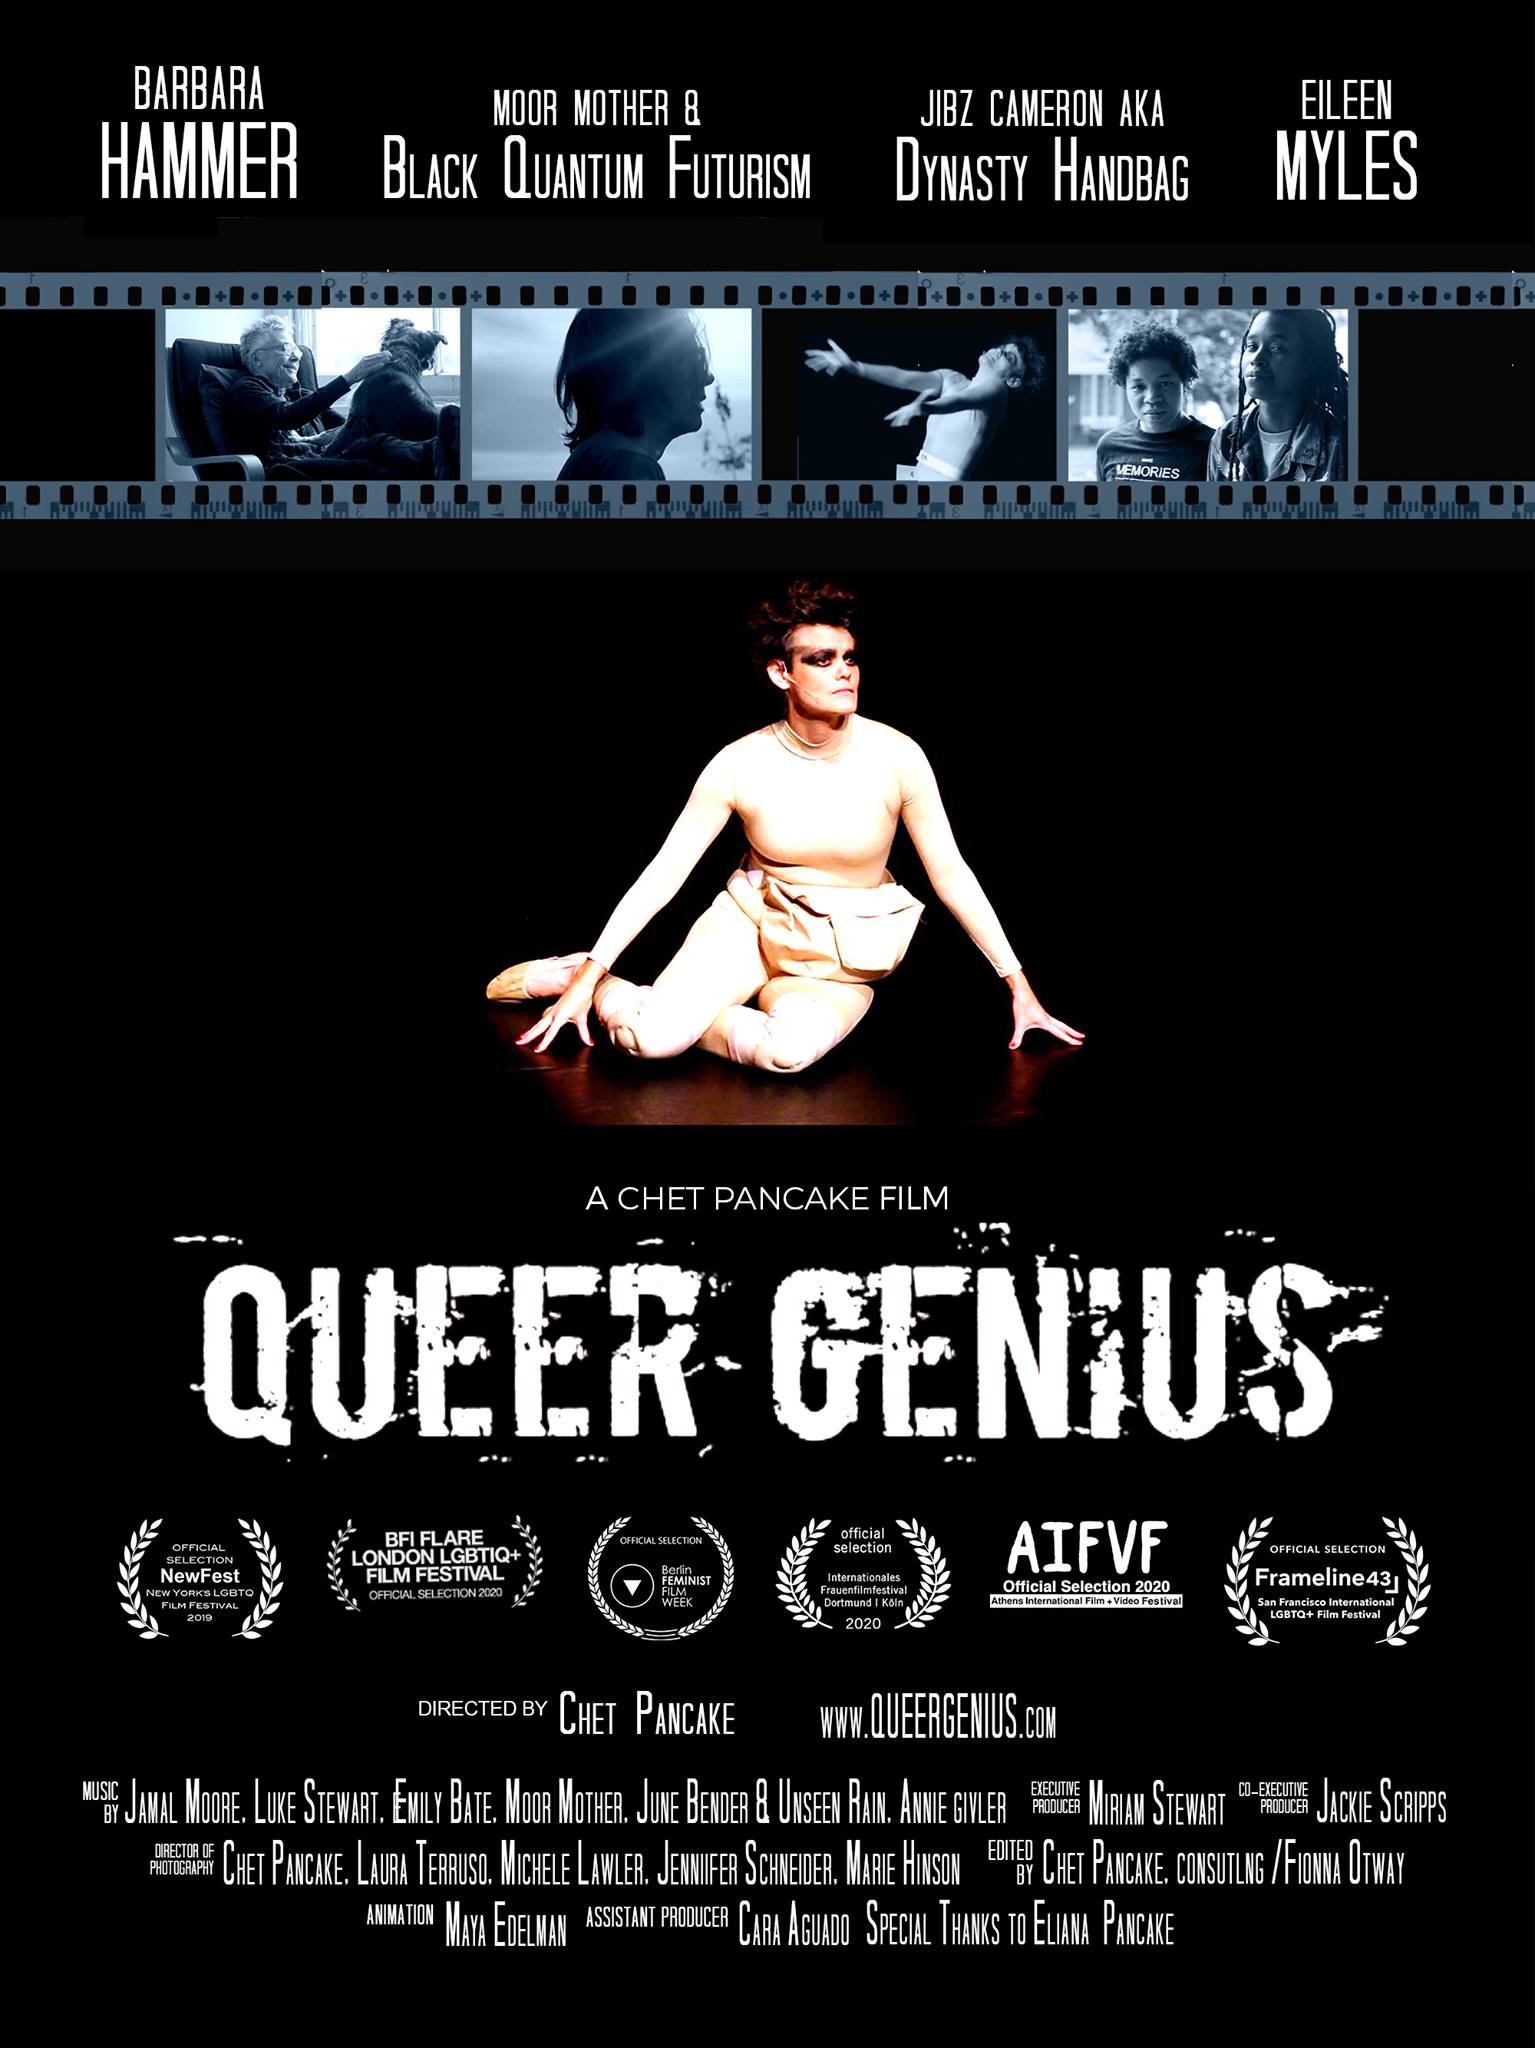 Theatrical Poster for the film "Queer Genius"